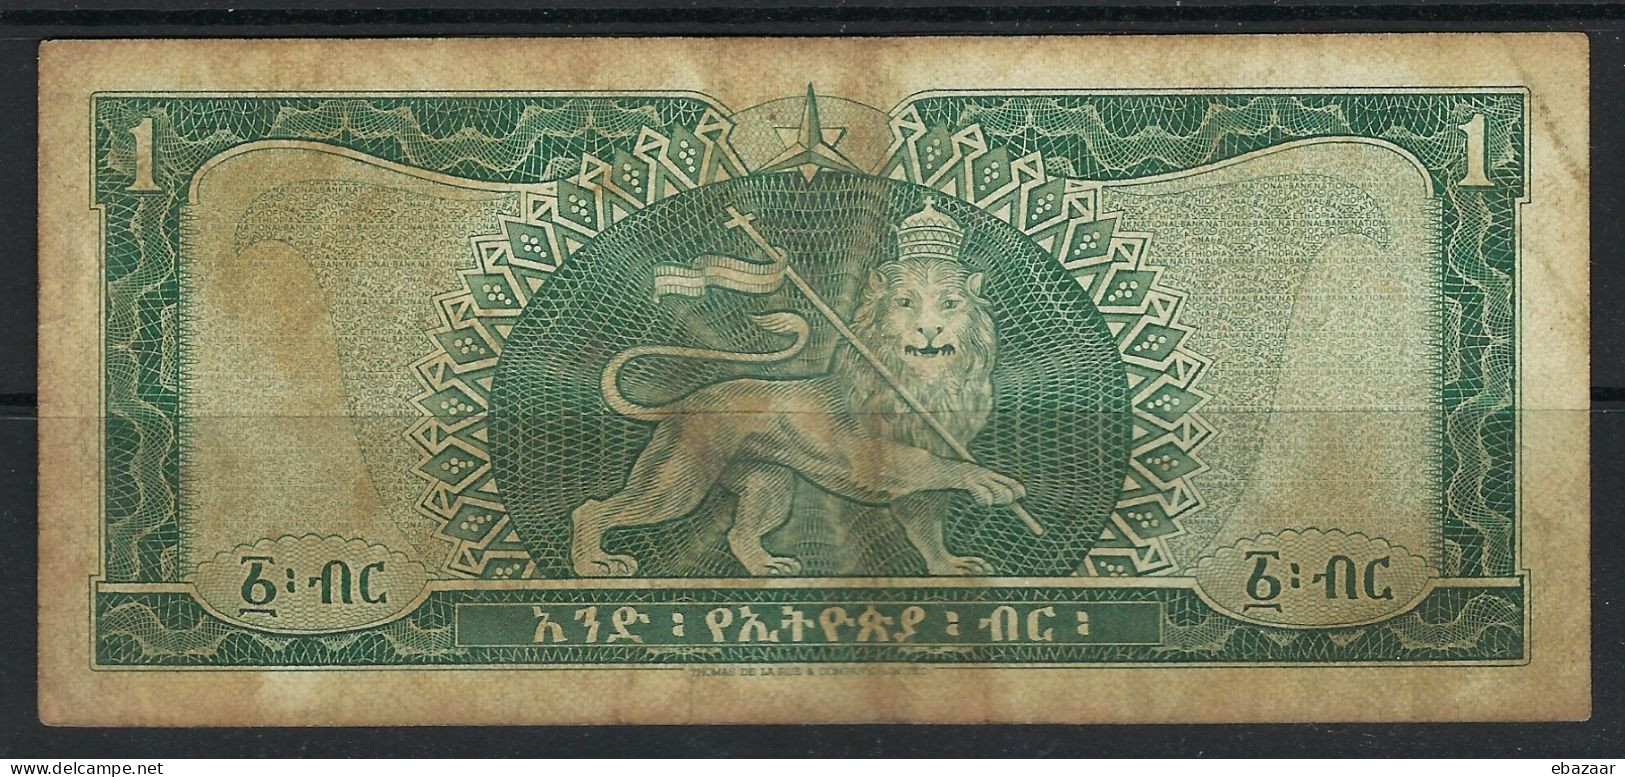 Ethiopia 1966 Banknote 1 Ethiopian Dollar P-25 Circulated - Aethiopien